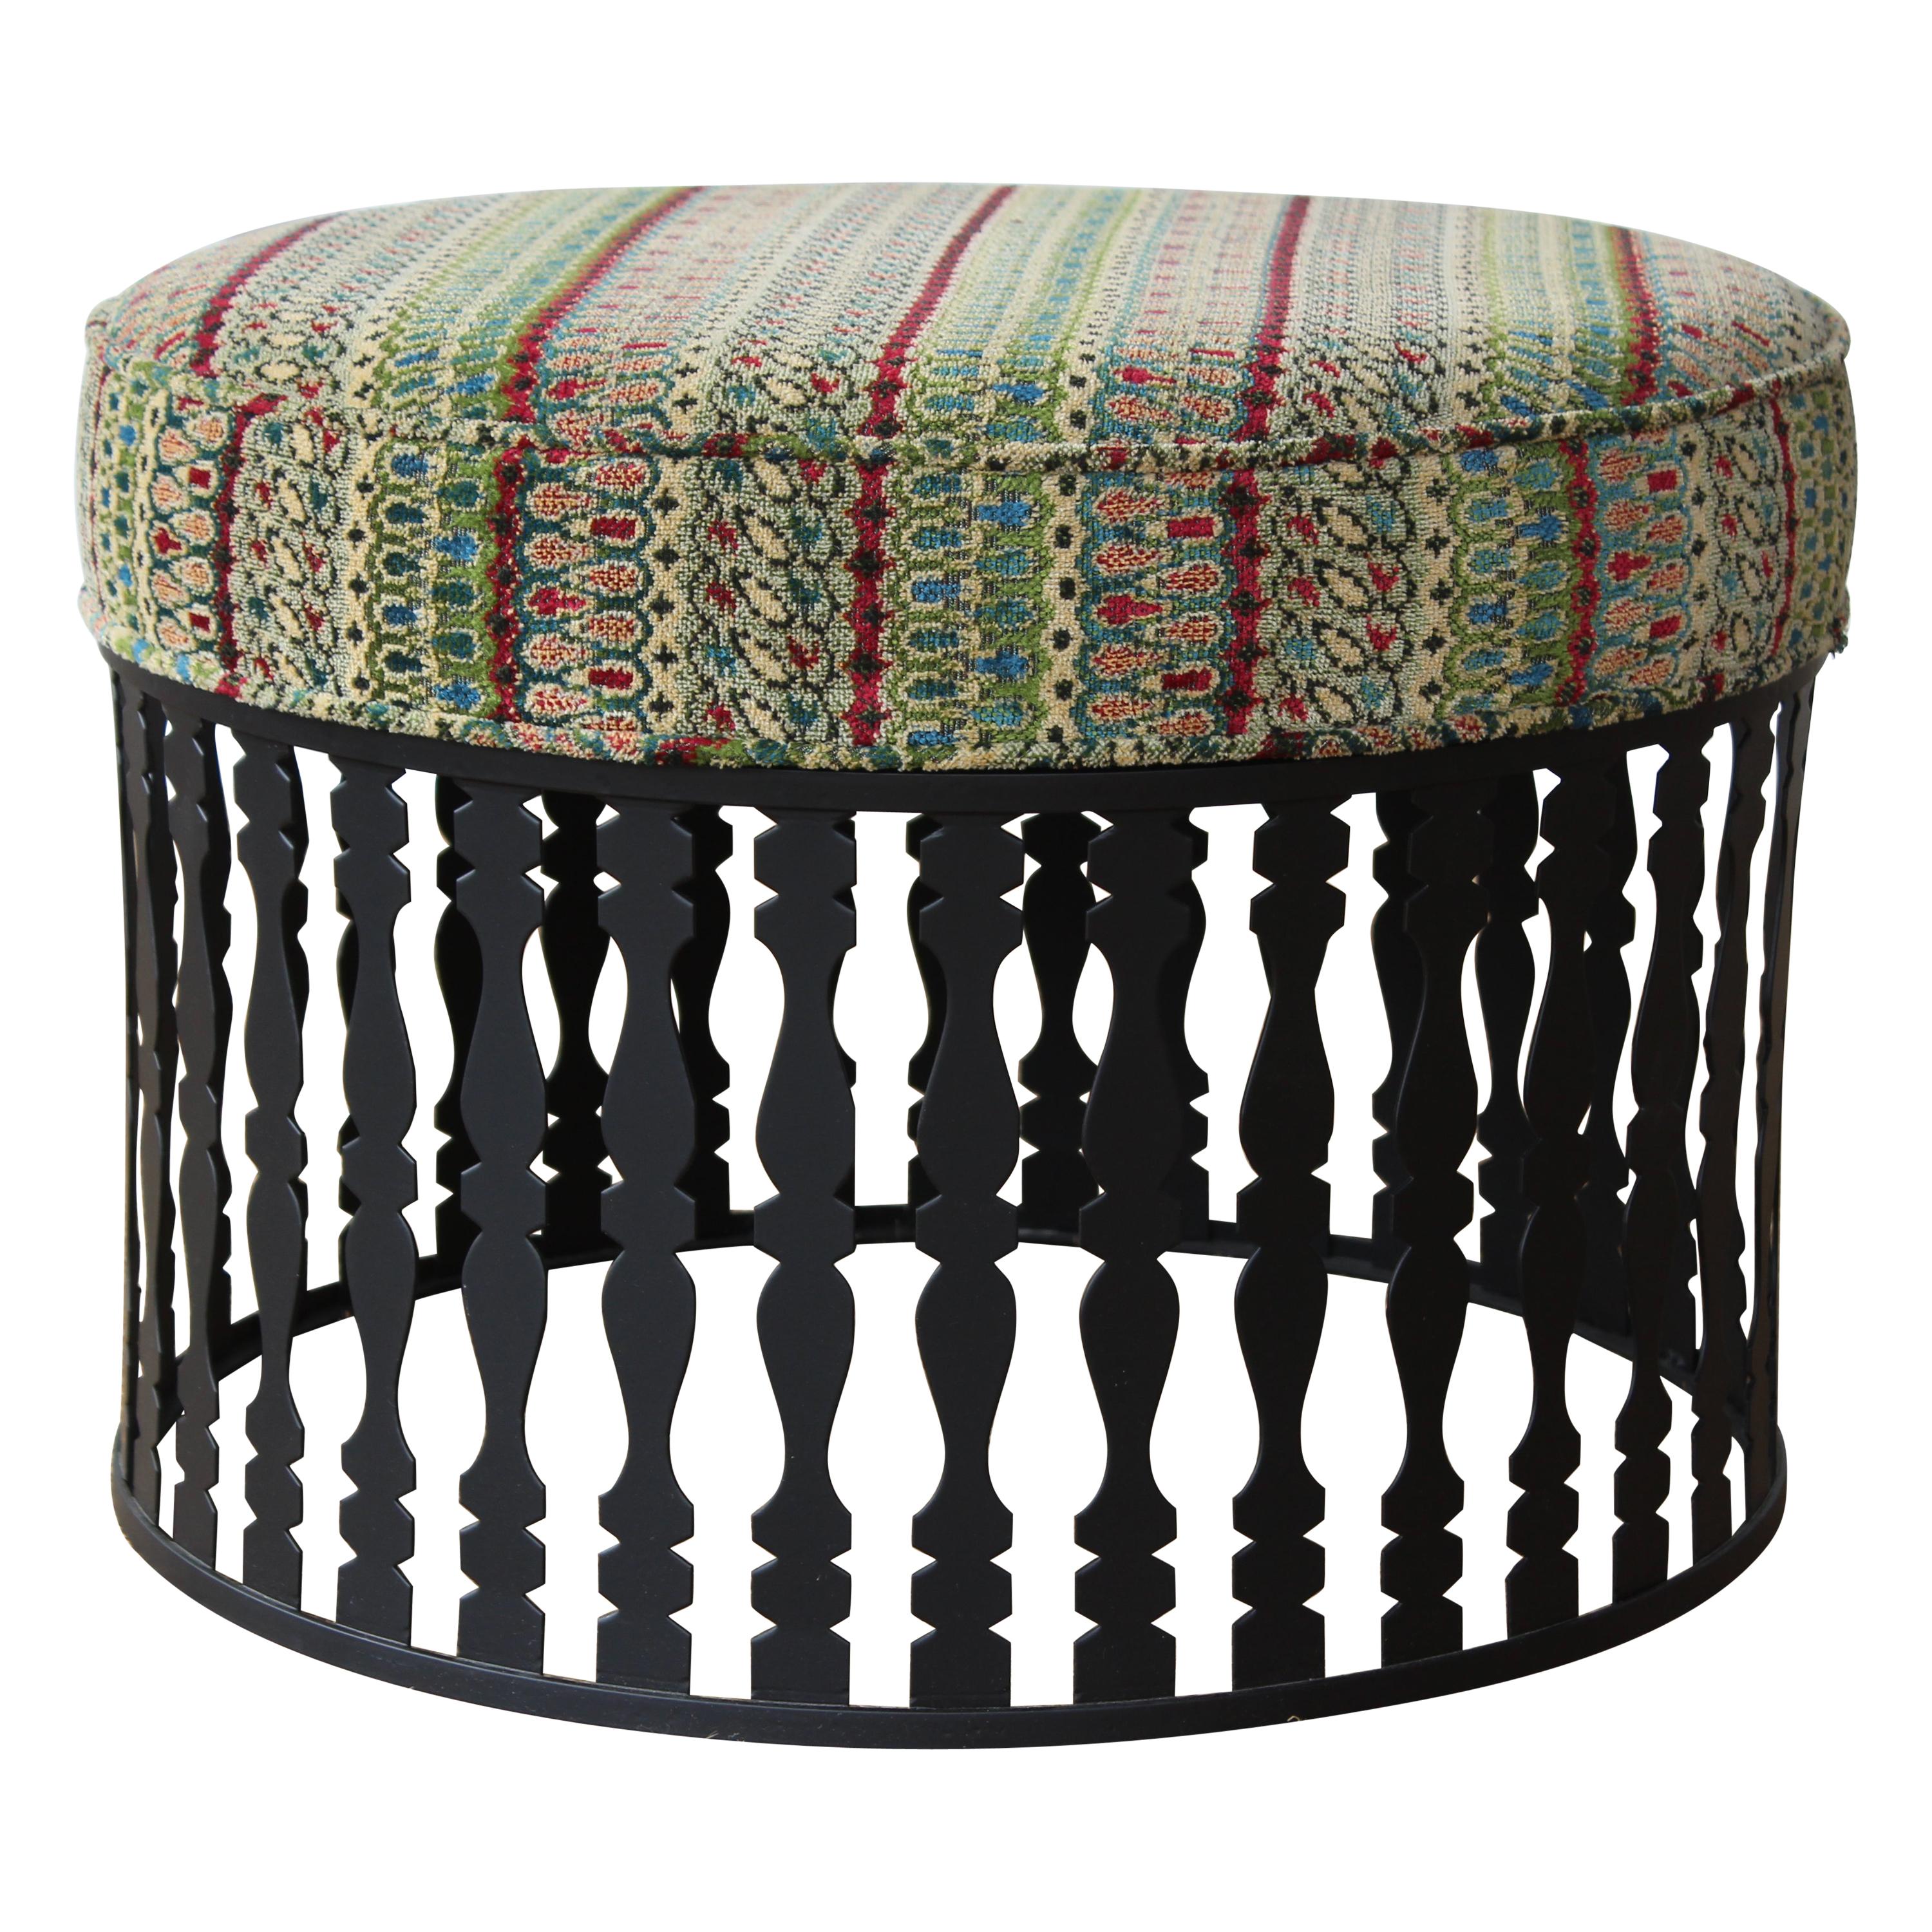 1960s Upholstered Ottoman